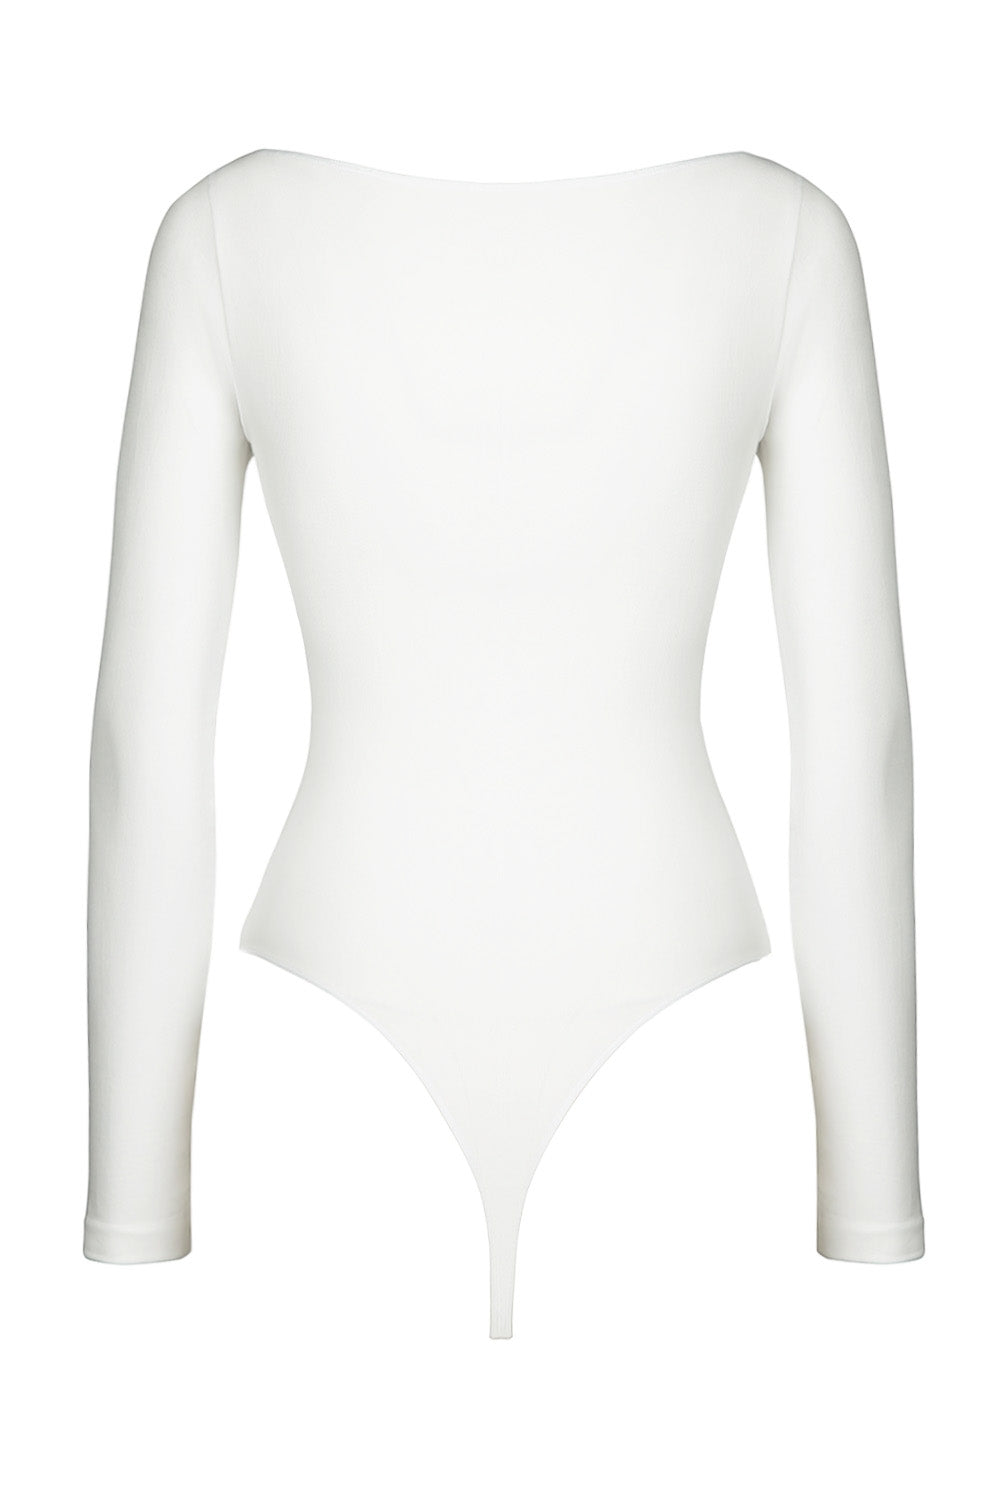 Bodysuit №49 White